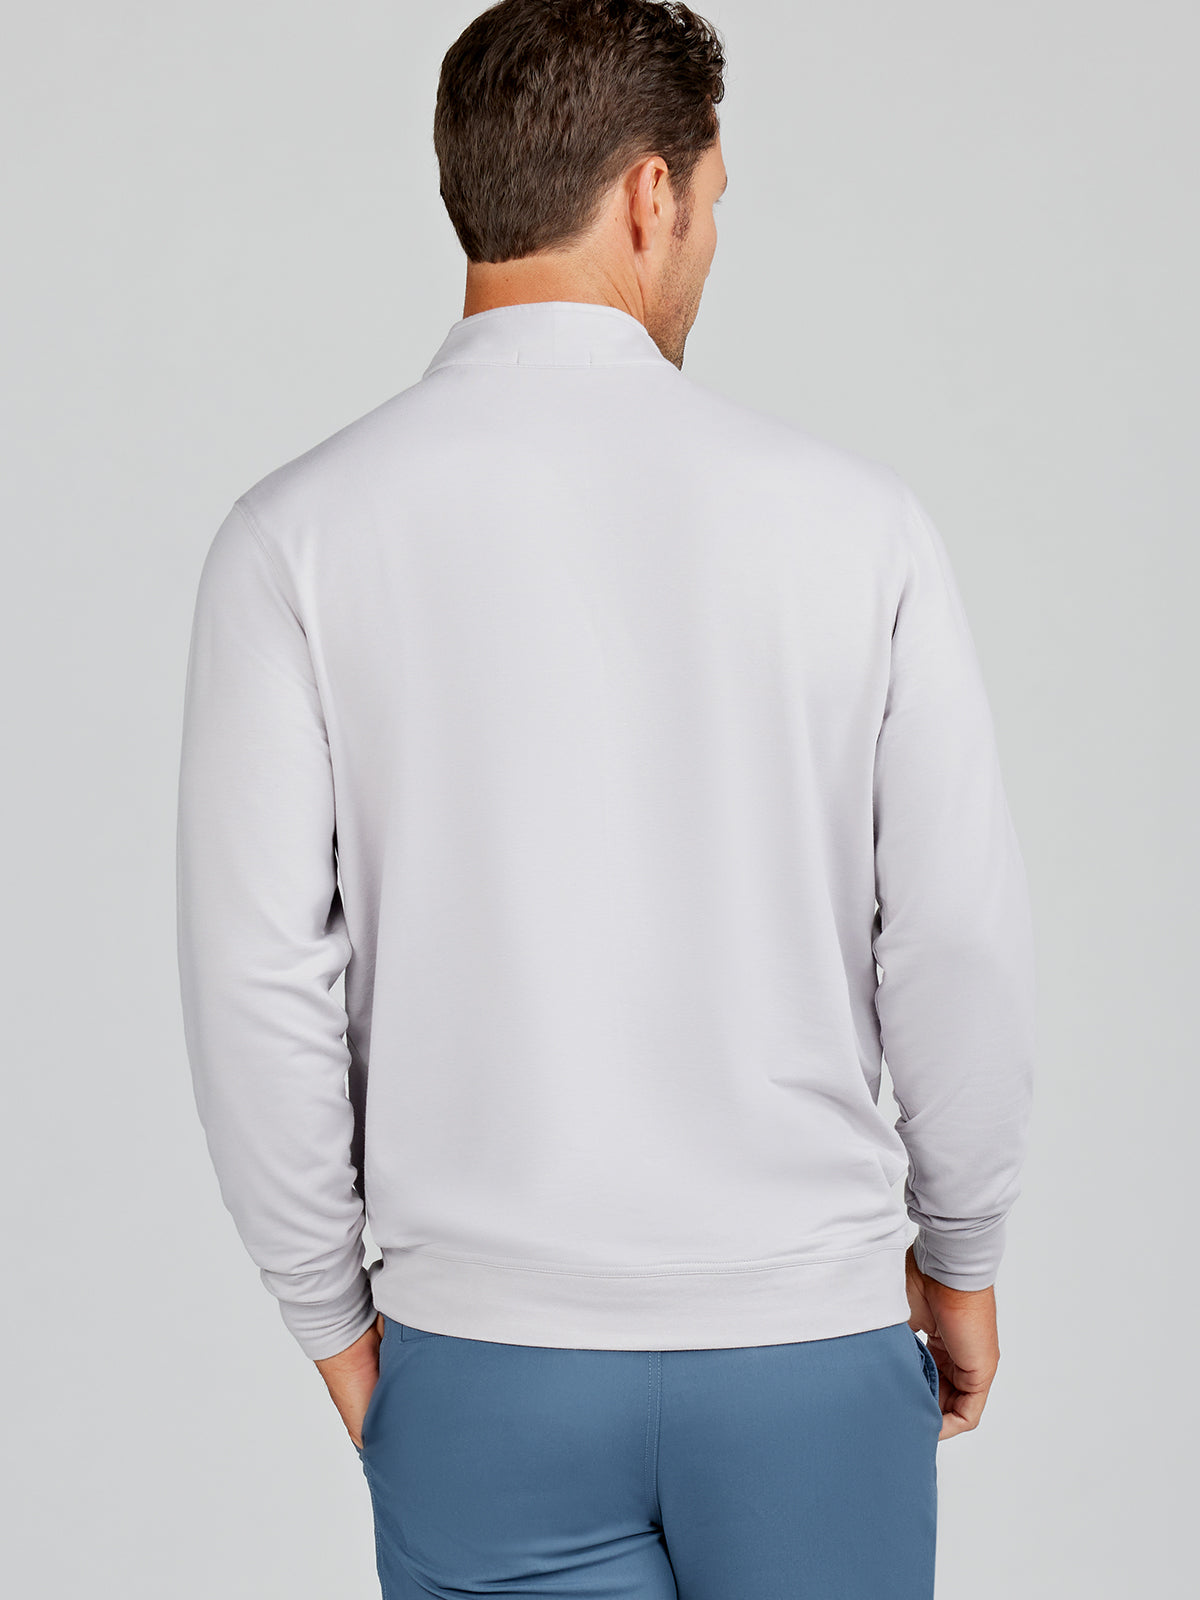 Men's Sweater Elbow Patches Zip Up Sweatshirts for Men Mens Long Sleeve  Golf Shirts with Collar Hiking Jacket Men Lightweight Sweater Men Khaki at   Men's Clothing store